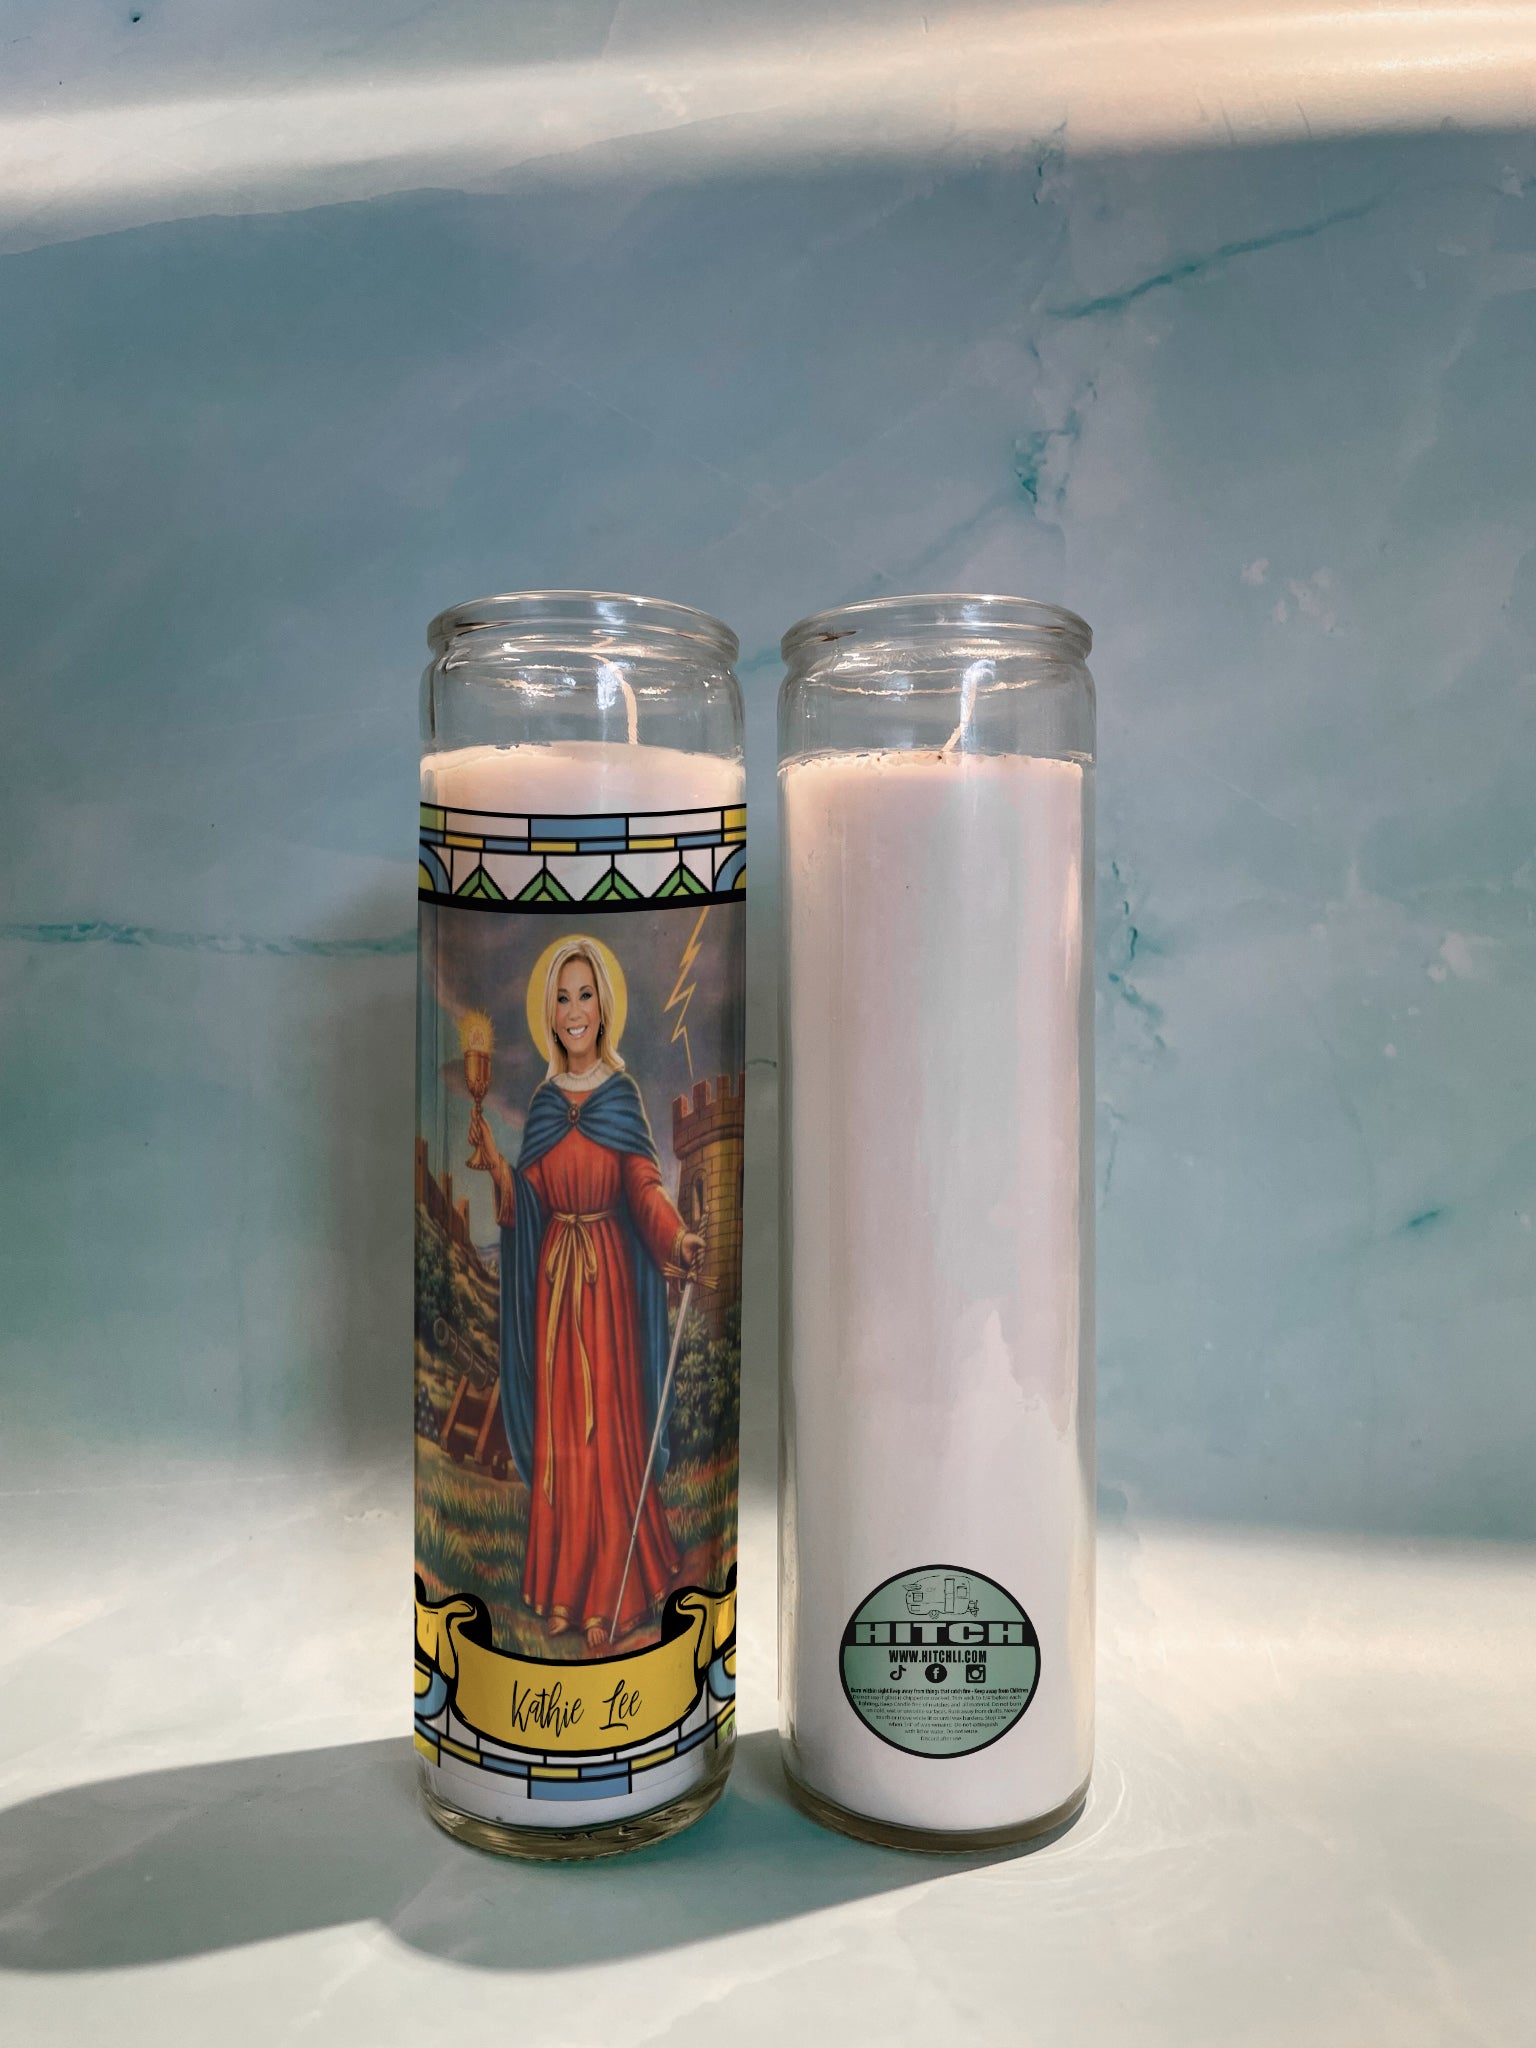 Kathie Lee Gifford Original Prayer Candle